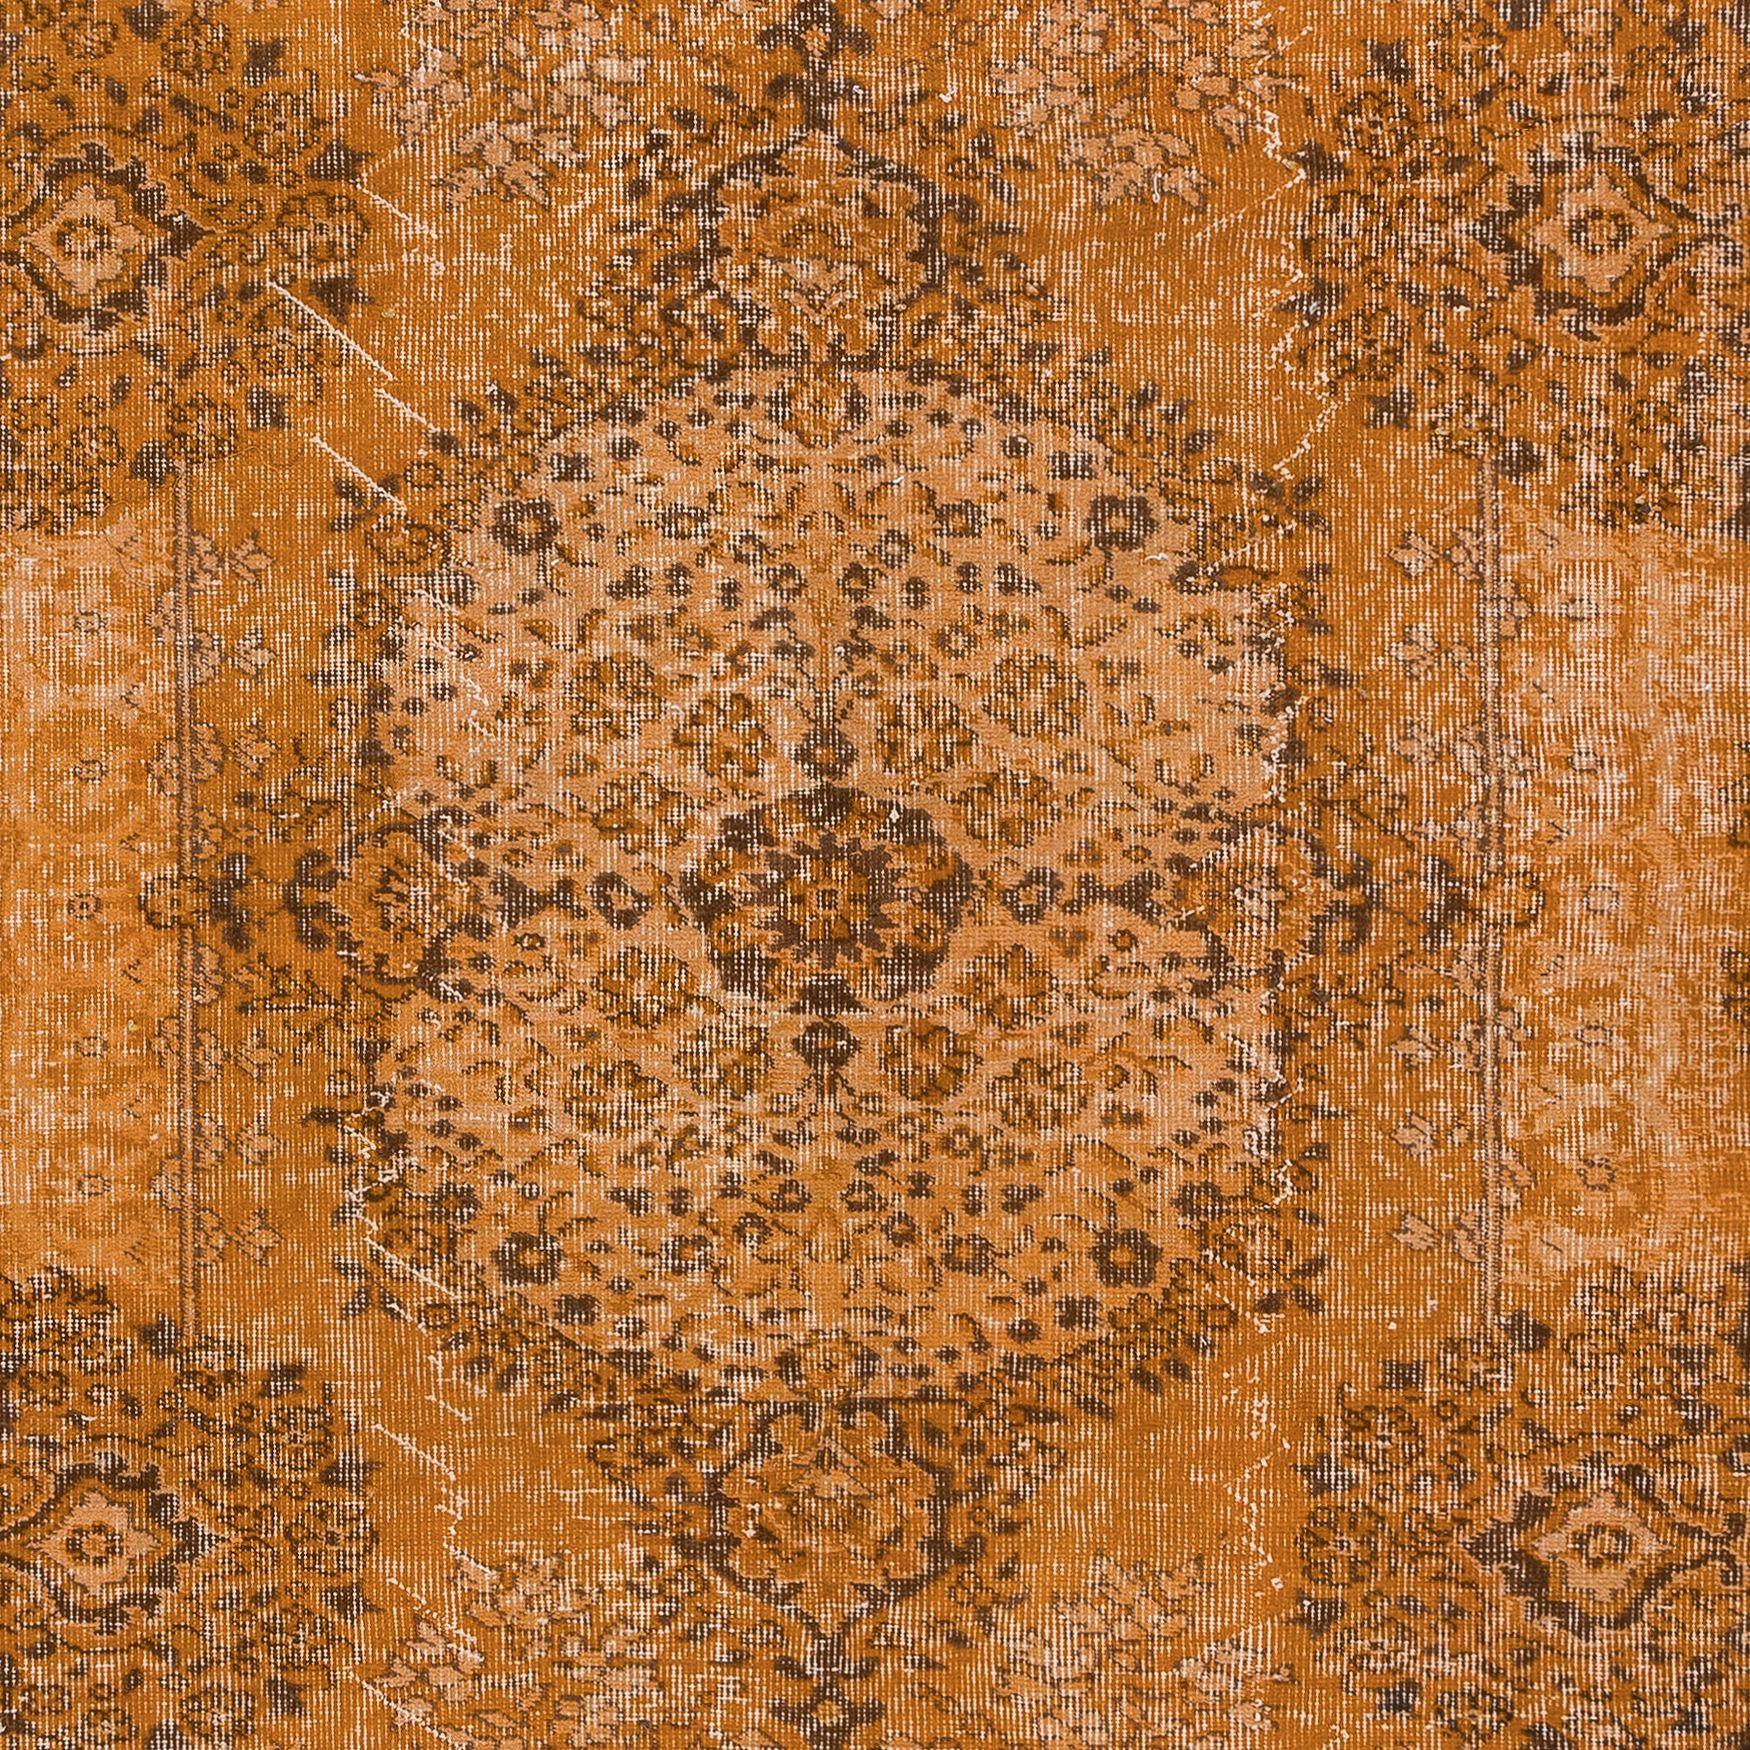 Turkish 5.6x8.4 Ft Dreamy Orange Rug, Handknotted in Turkey, Modern Living Room Carpet For Sale